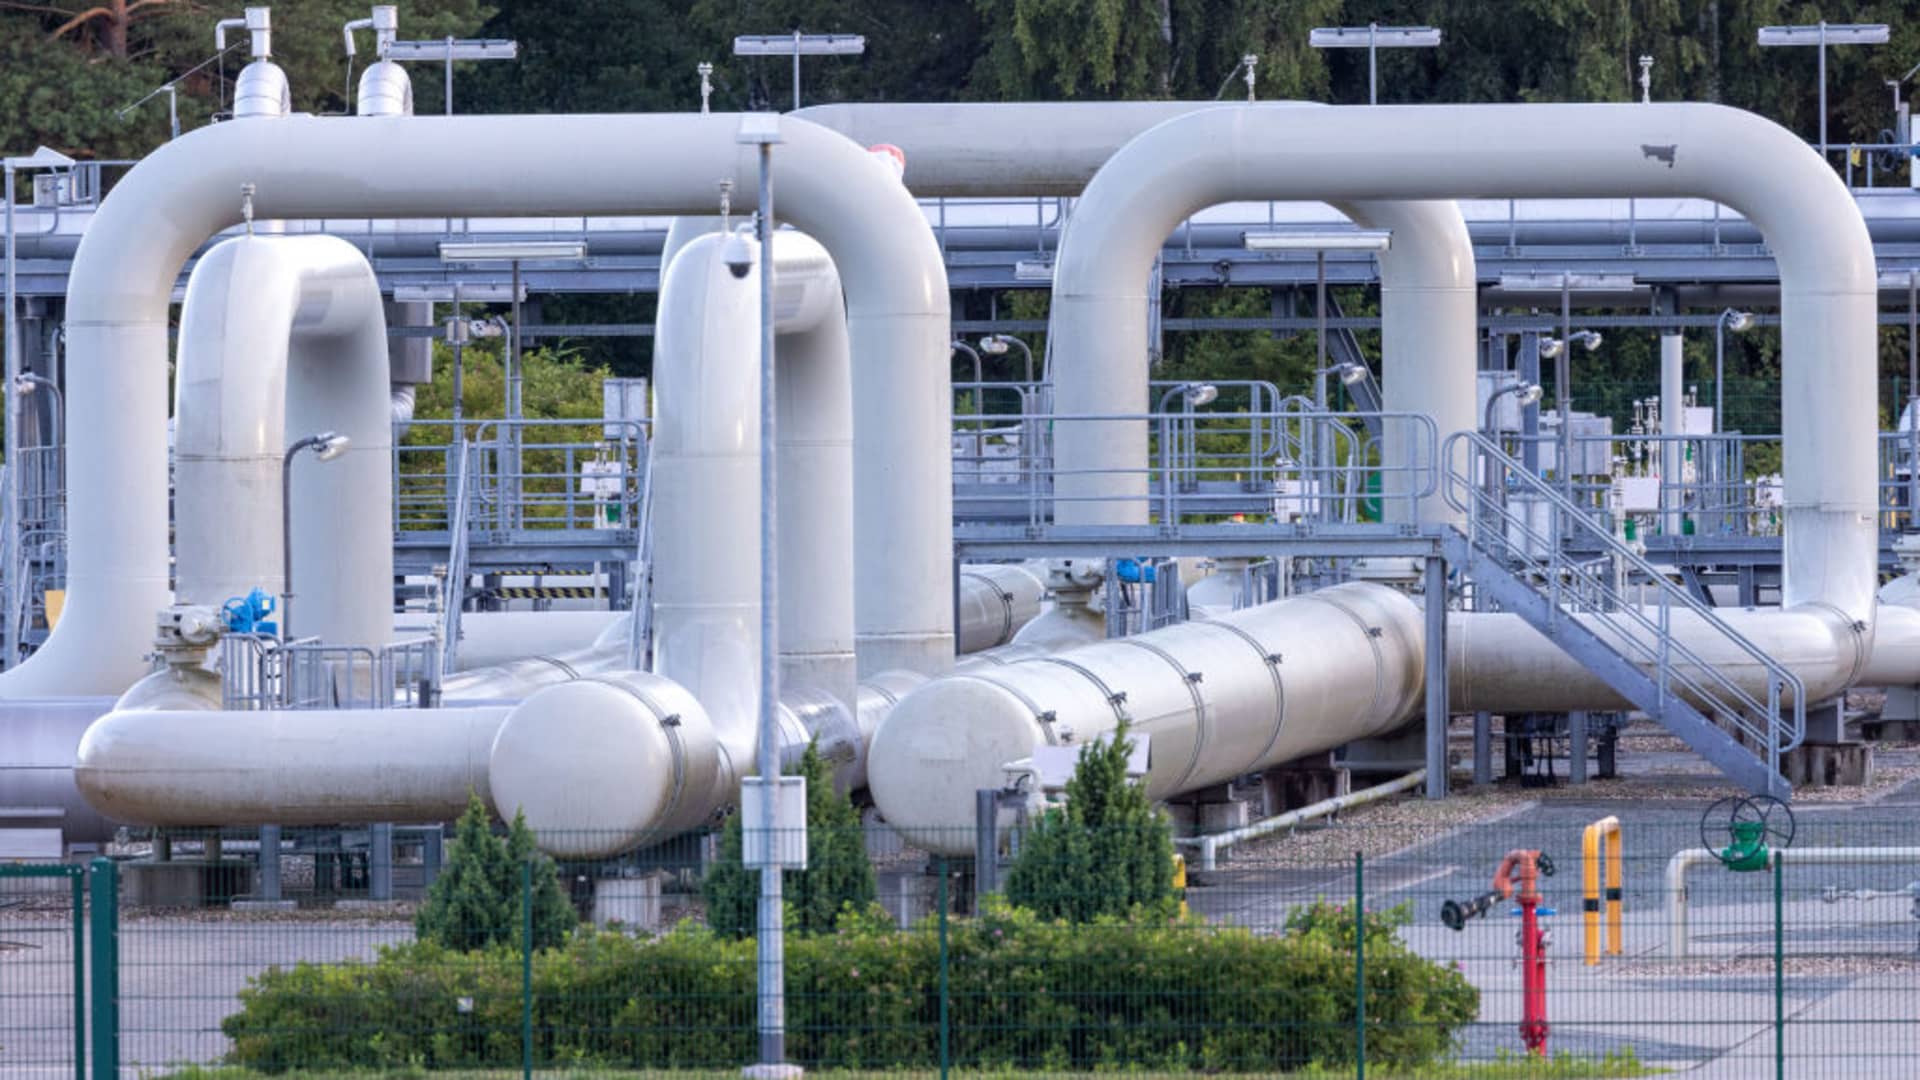 Europe on high alert as Russia temporarily halts gas flows via major pipeline